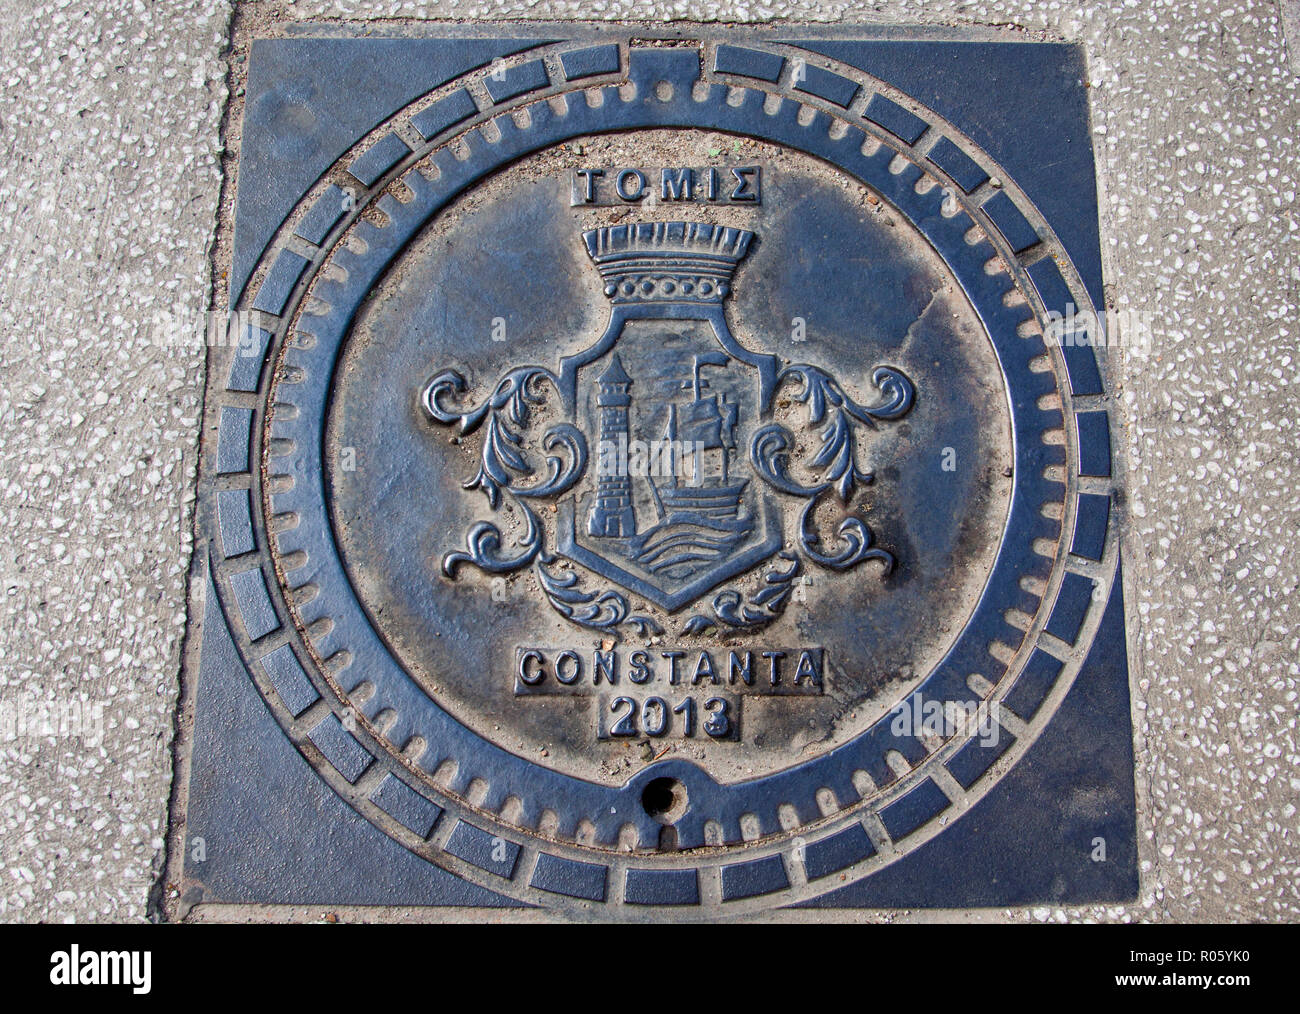 Manhole cover, Constanta, Romania Stock Photo